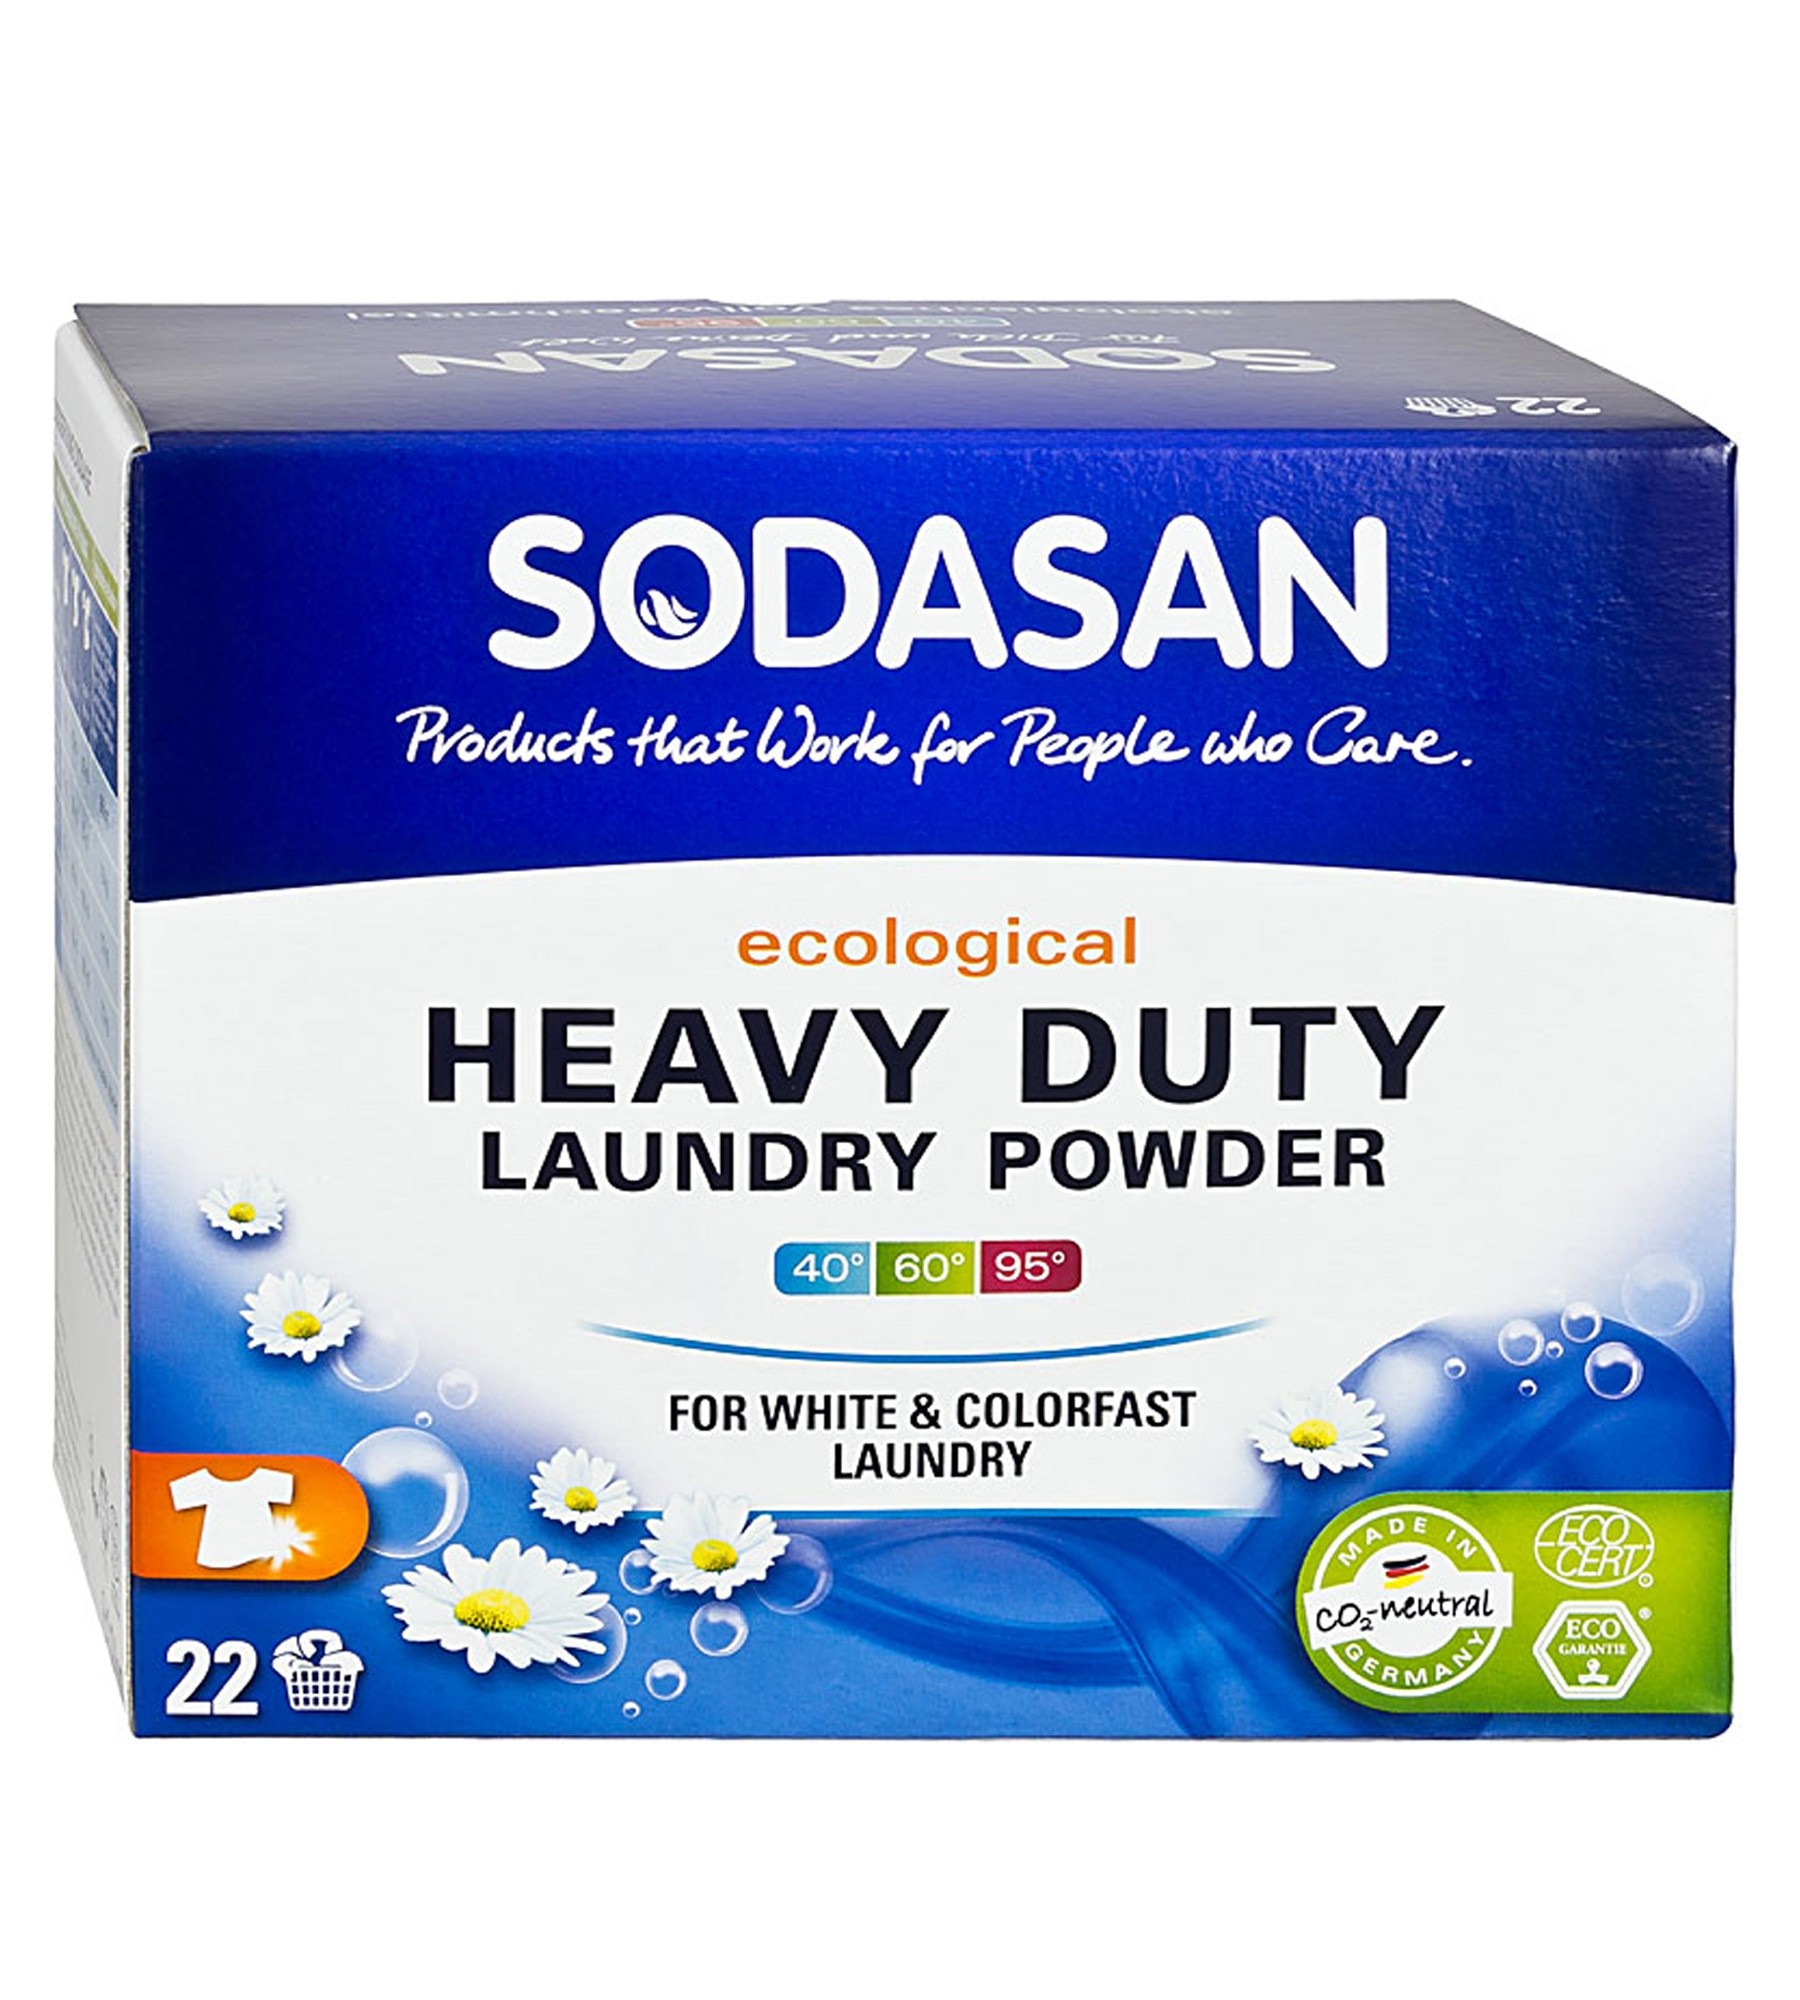 Sodasan Heavy Duty Detergent Powder